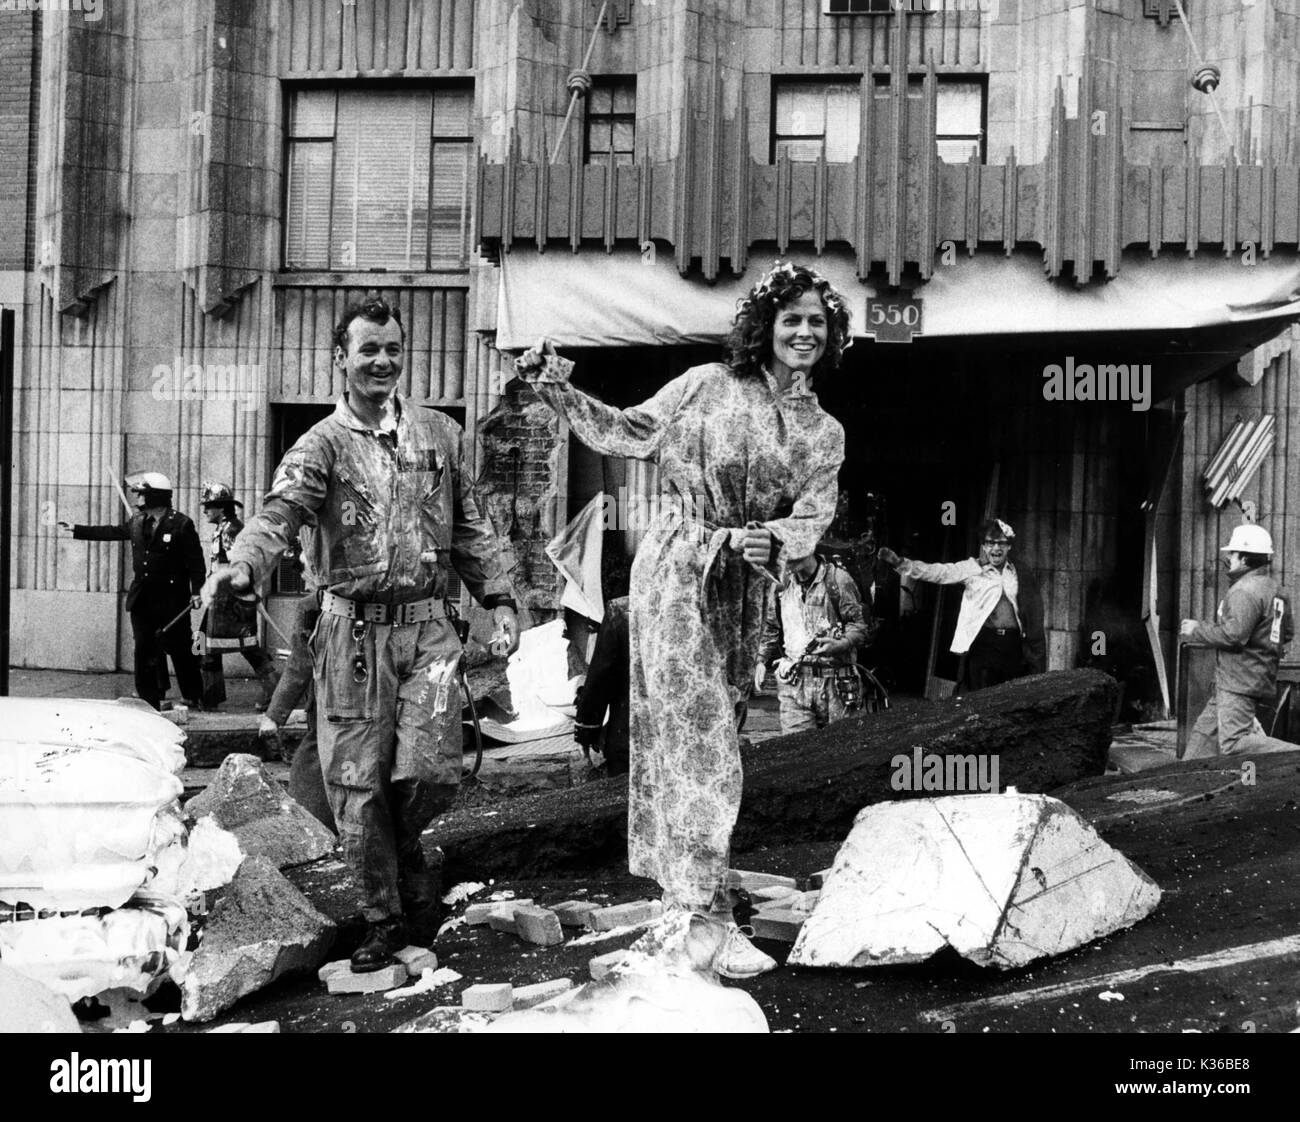 Sigourney Weaver Black and White Stock Photos & Images - Alamy1300 x 1122